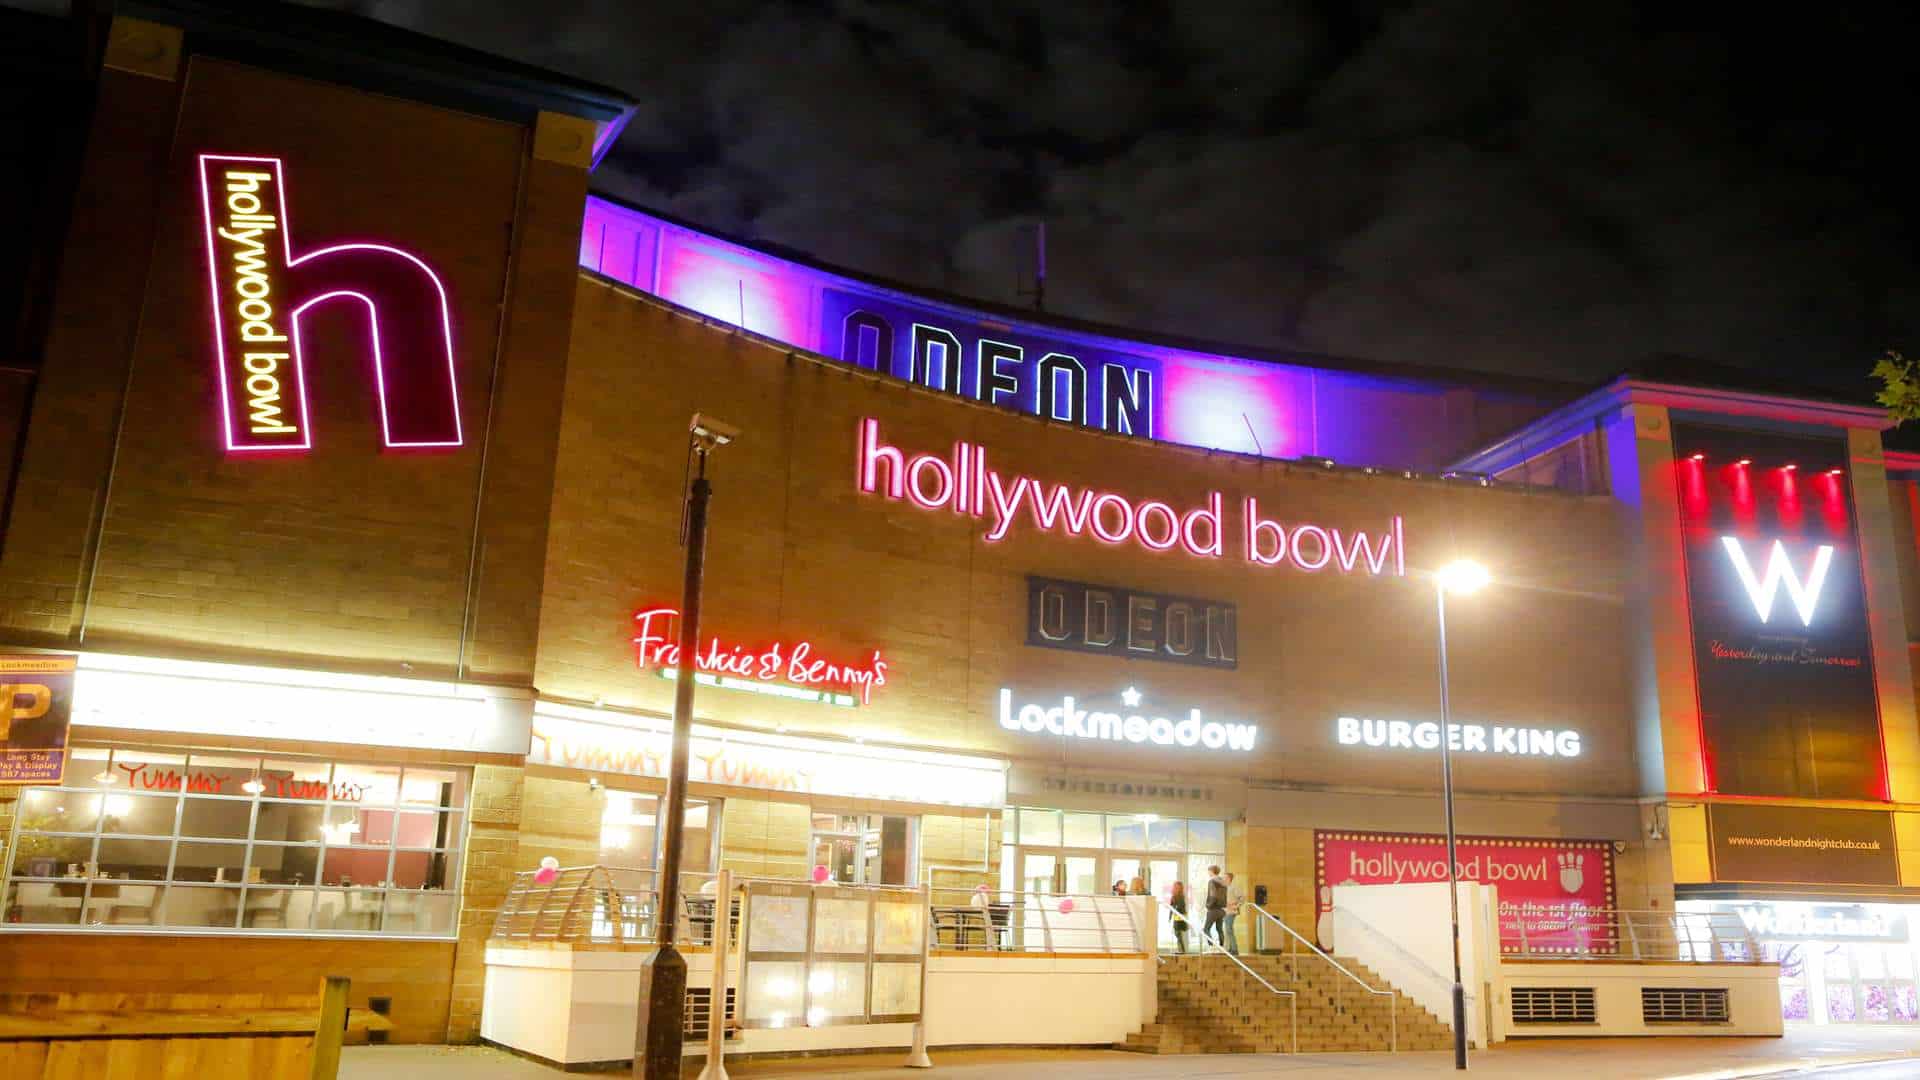 Hollywood Bowl Maidstone in UK